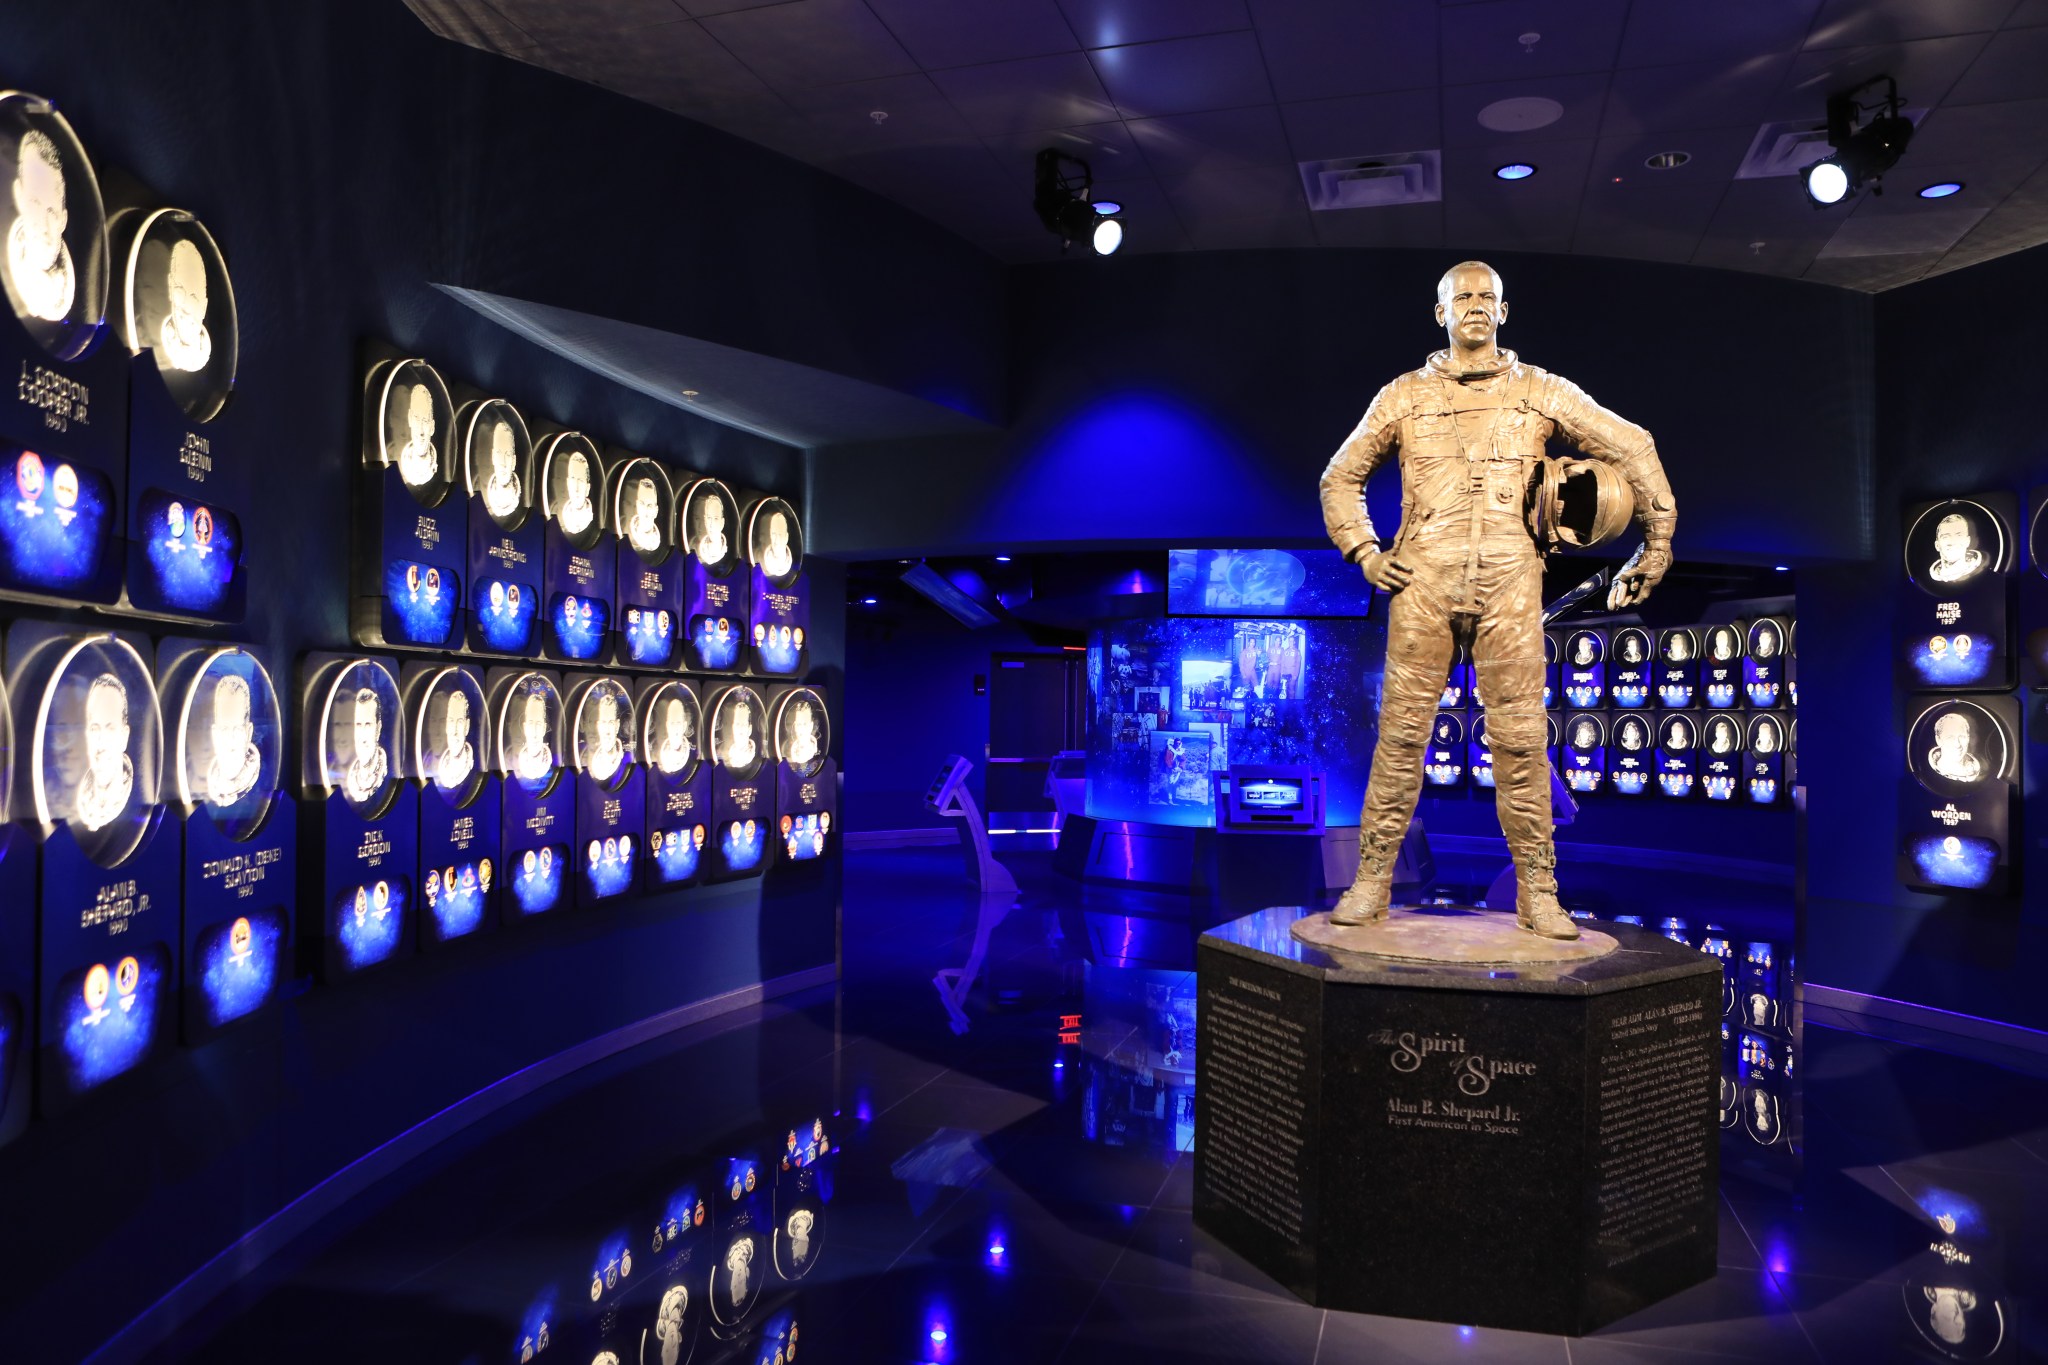 U.S. Astronaut Hall of Fame